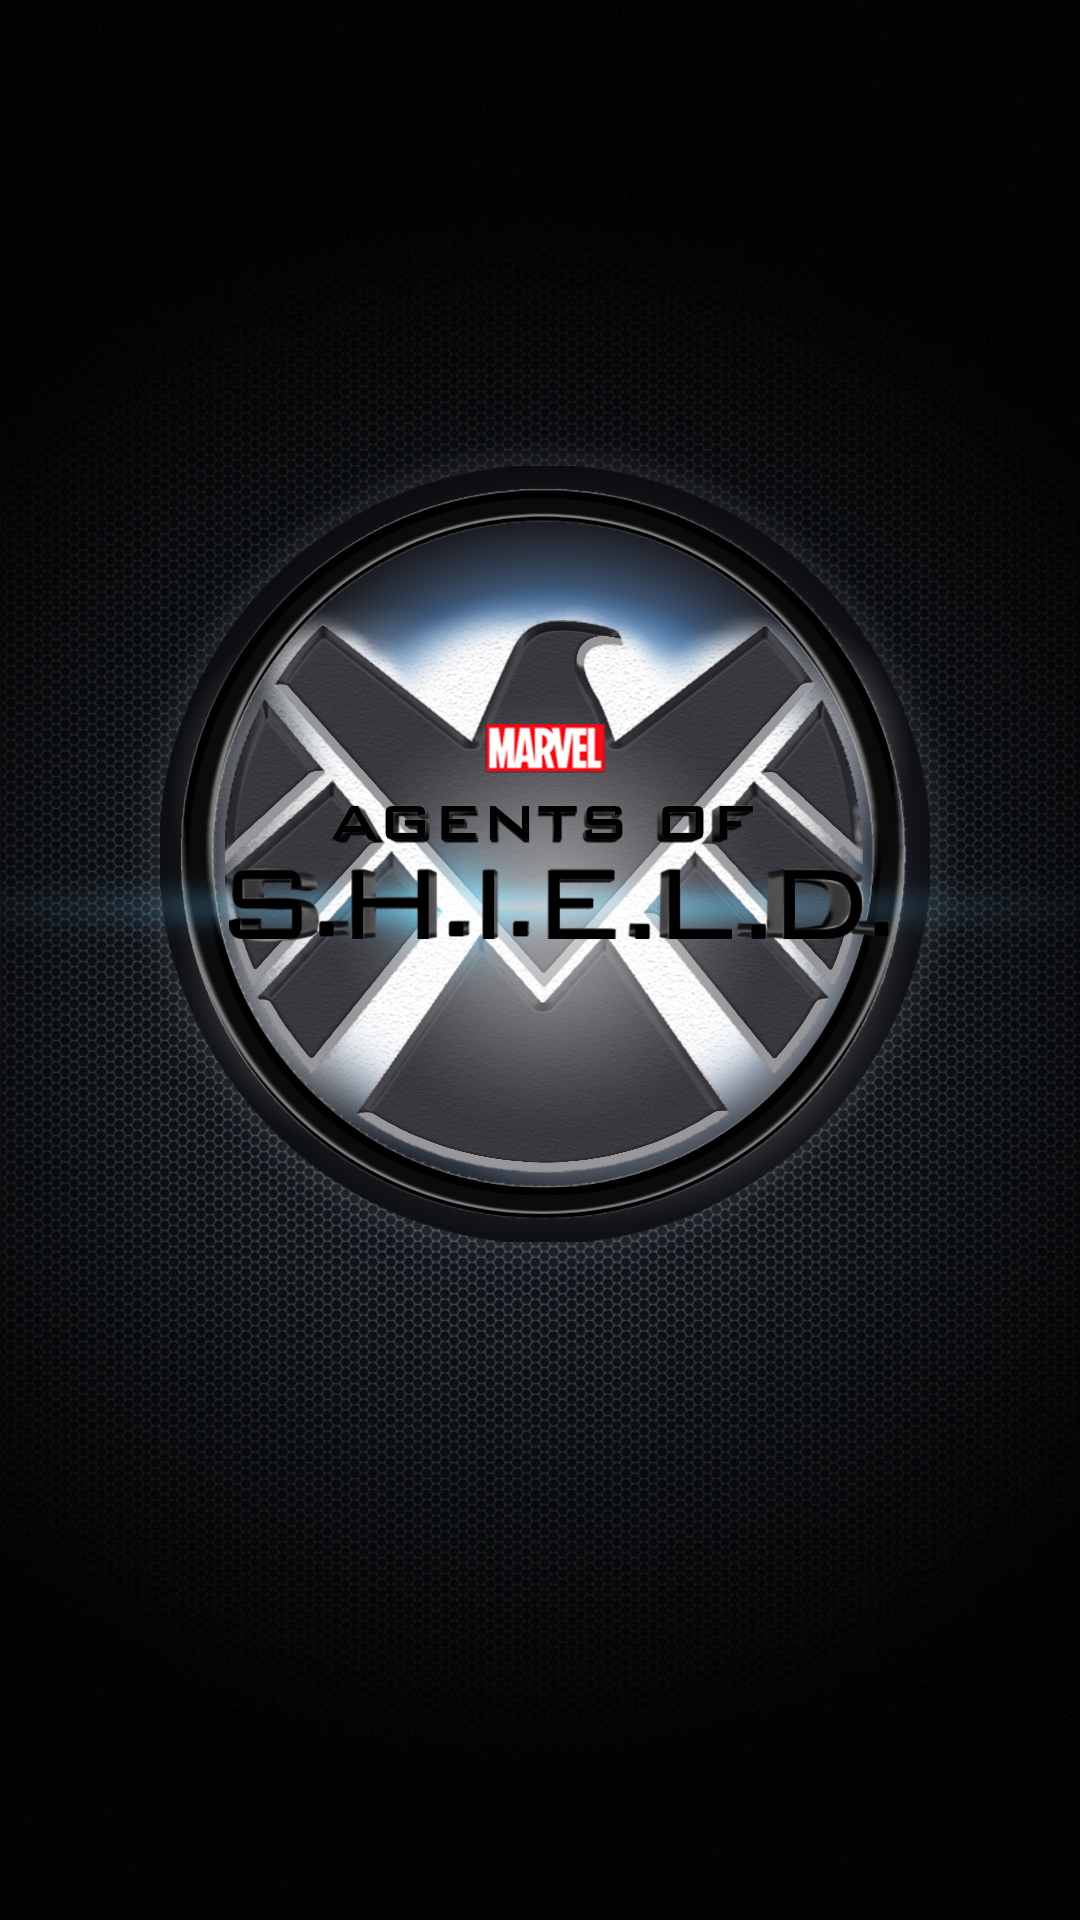 Marvel's Agents of S.H.I.E.L.D. Logo by Starfade